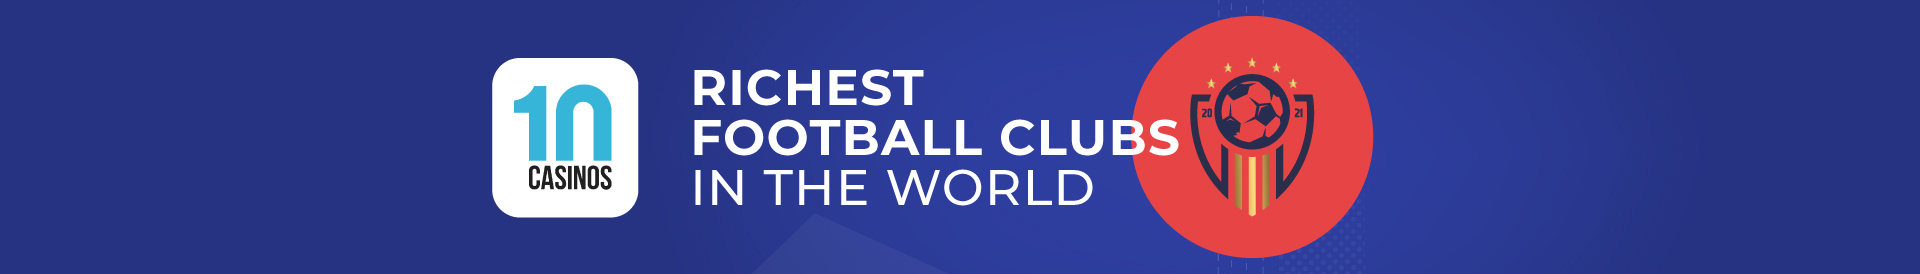 top 10 richest football clubs in the world desktop